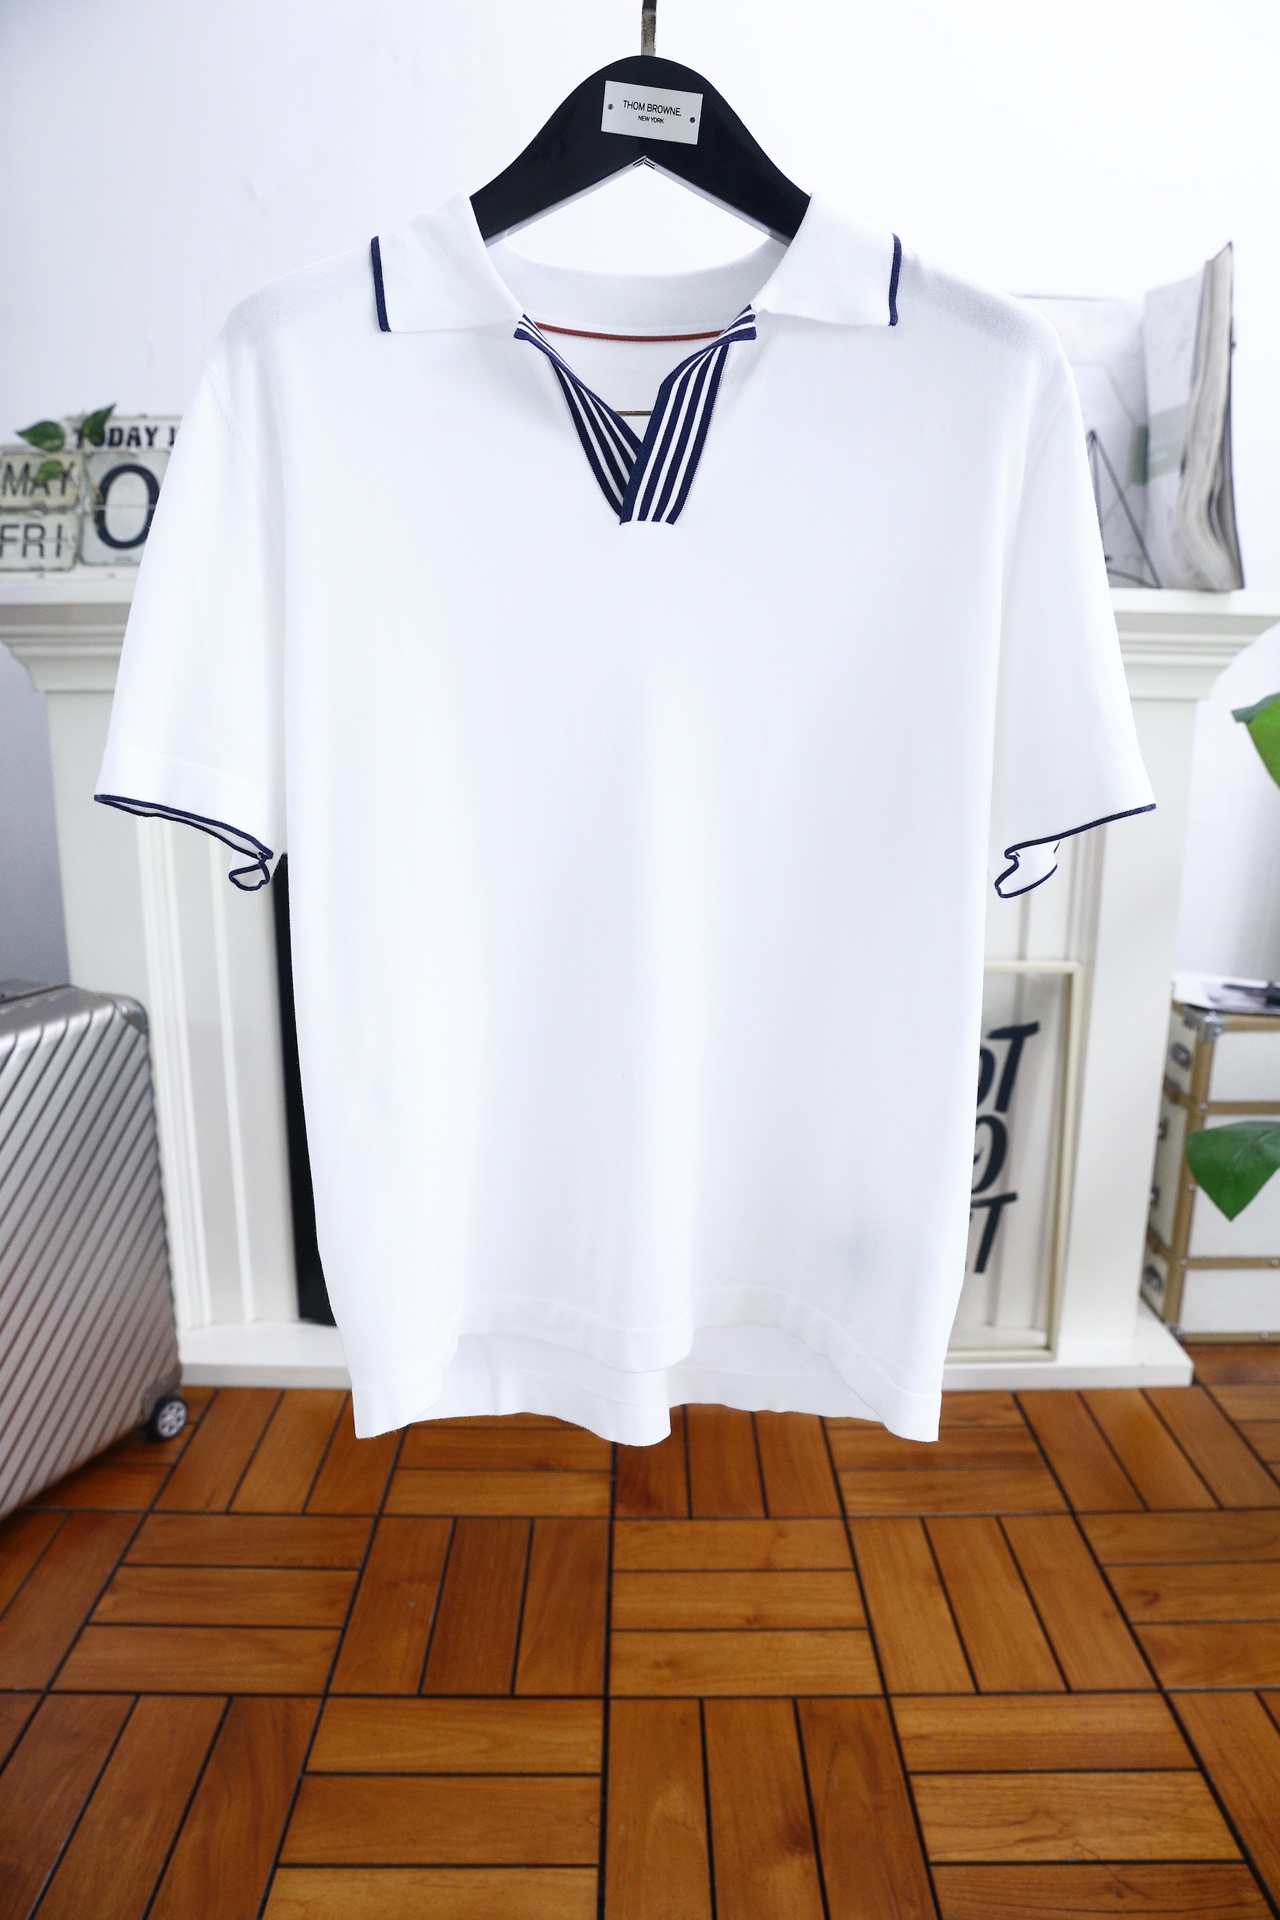 Hermes Clothing T-Shirt Men Summer Collection Fashion Short Sleeve